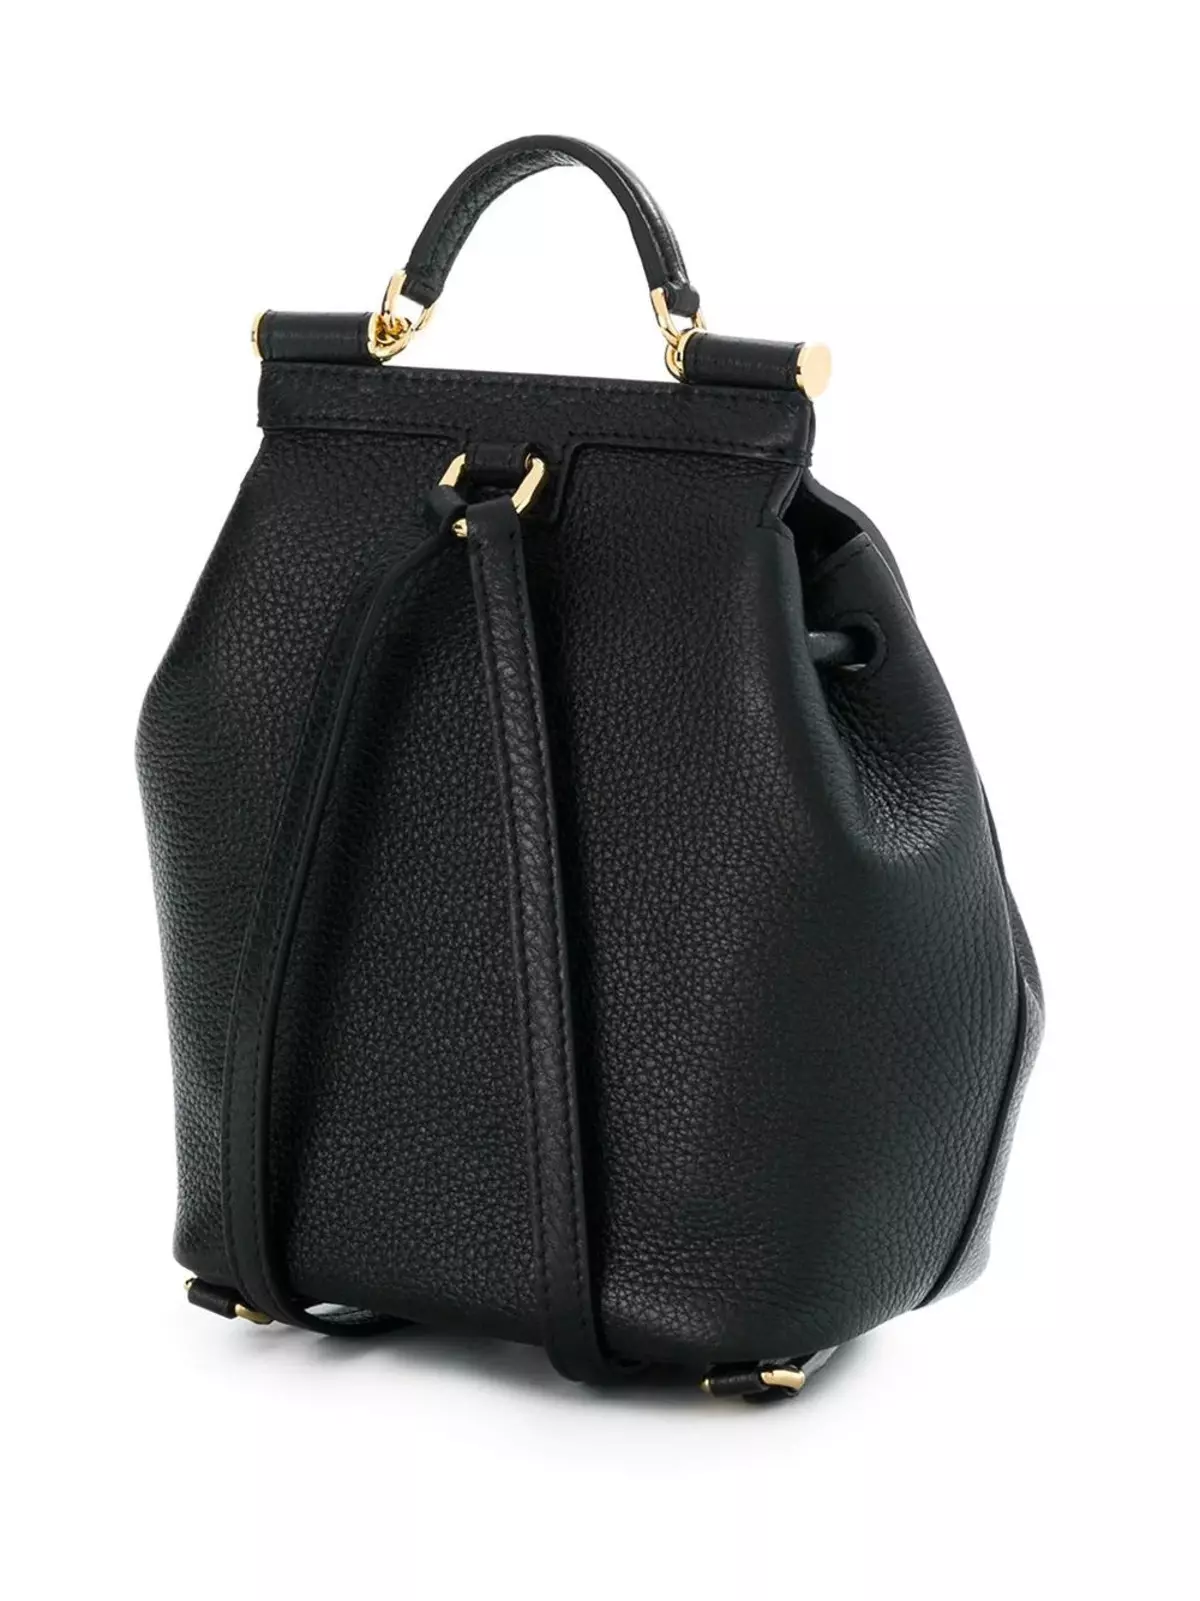 Dolce＆Gabbana Backpacks：女性和男士，黑色和紅色，皮革背包袋和其他型號。如何區分原始副本？ 2559_19